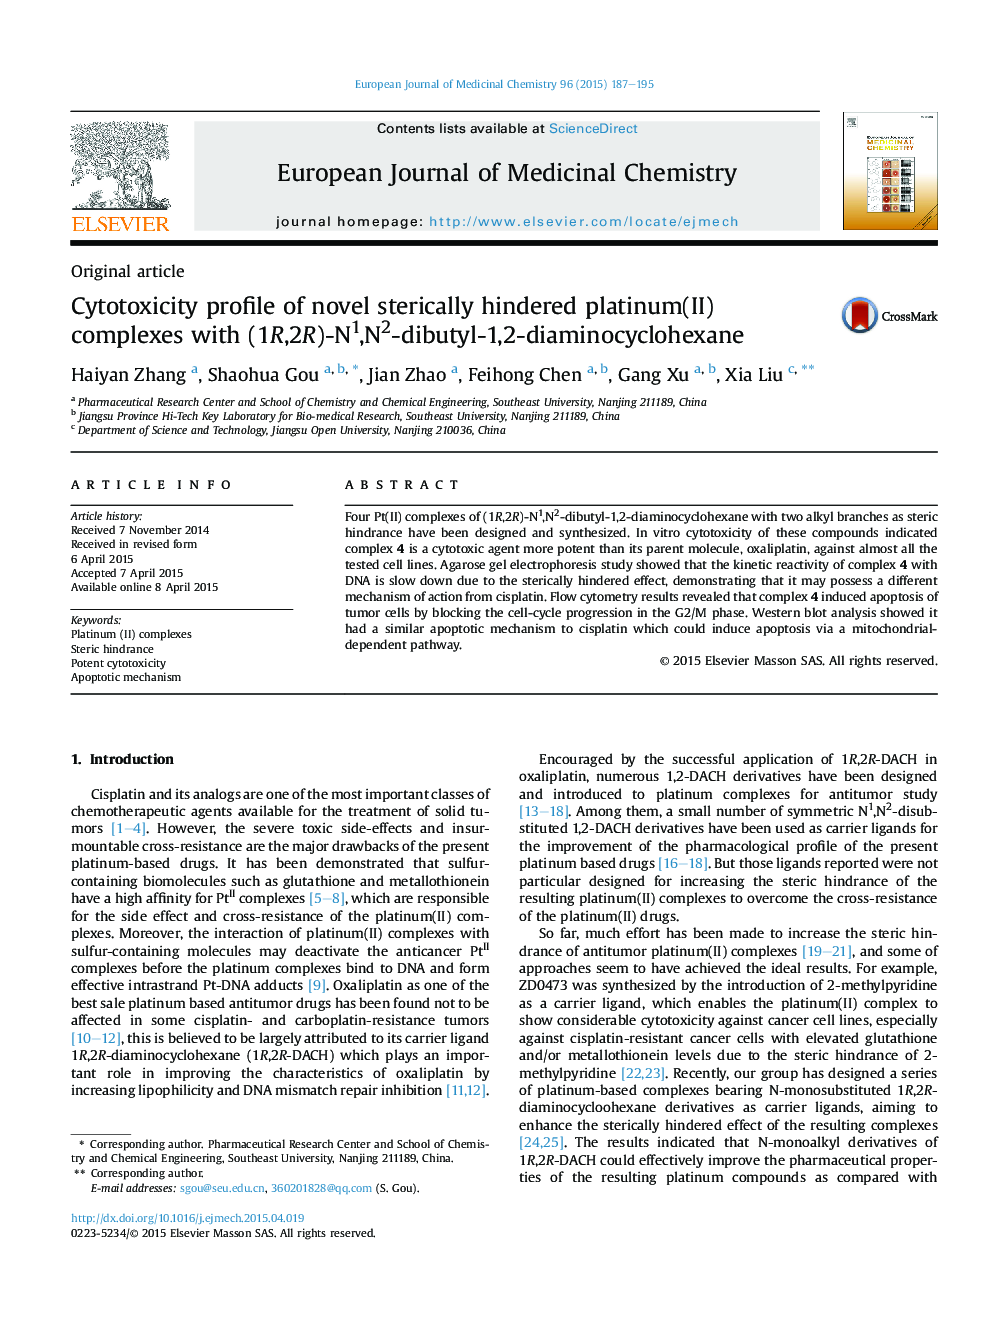 Cytotoxicity profile of novel sterically hindered platinum(II) complexes with (1R,2R)-N1,N2-dibutyl-1,2-diaminocyclohexane